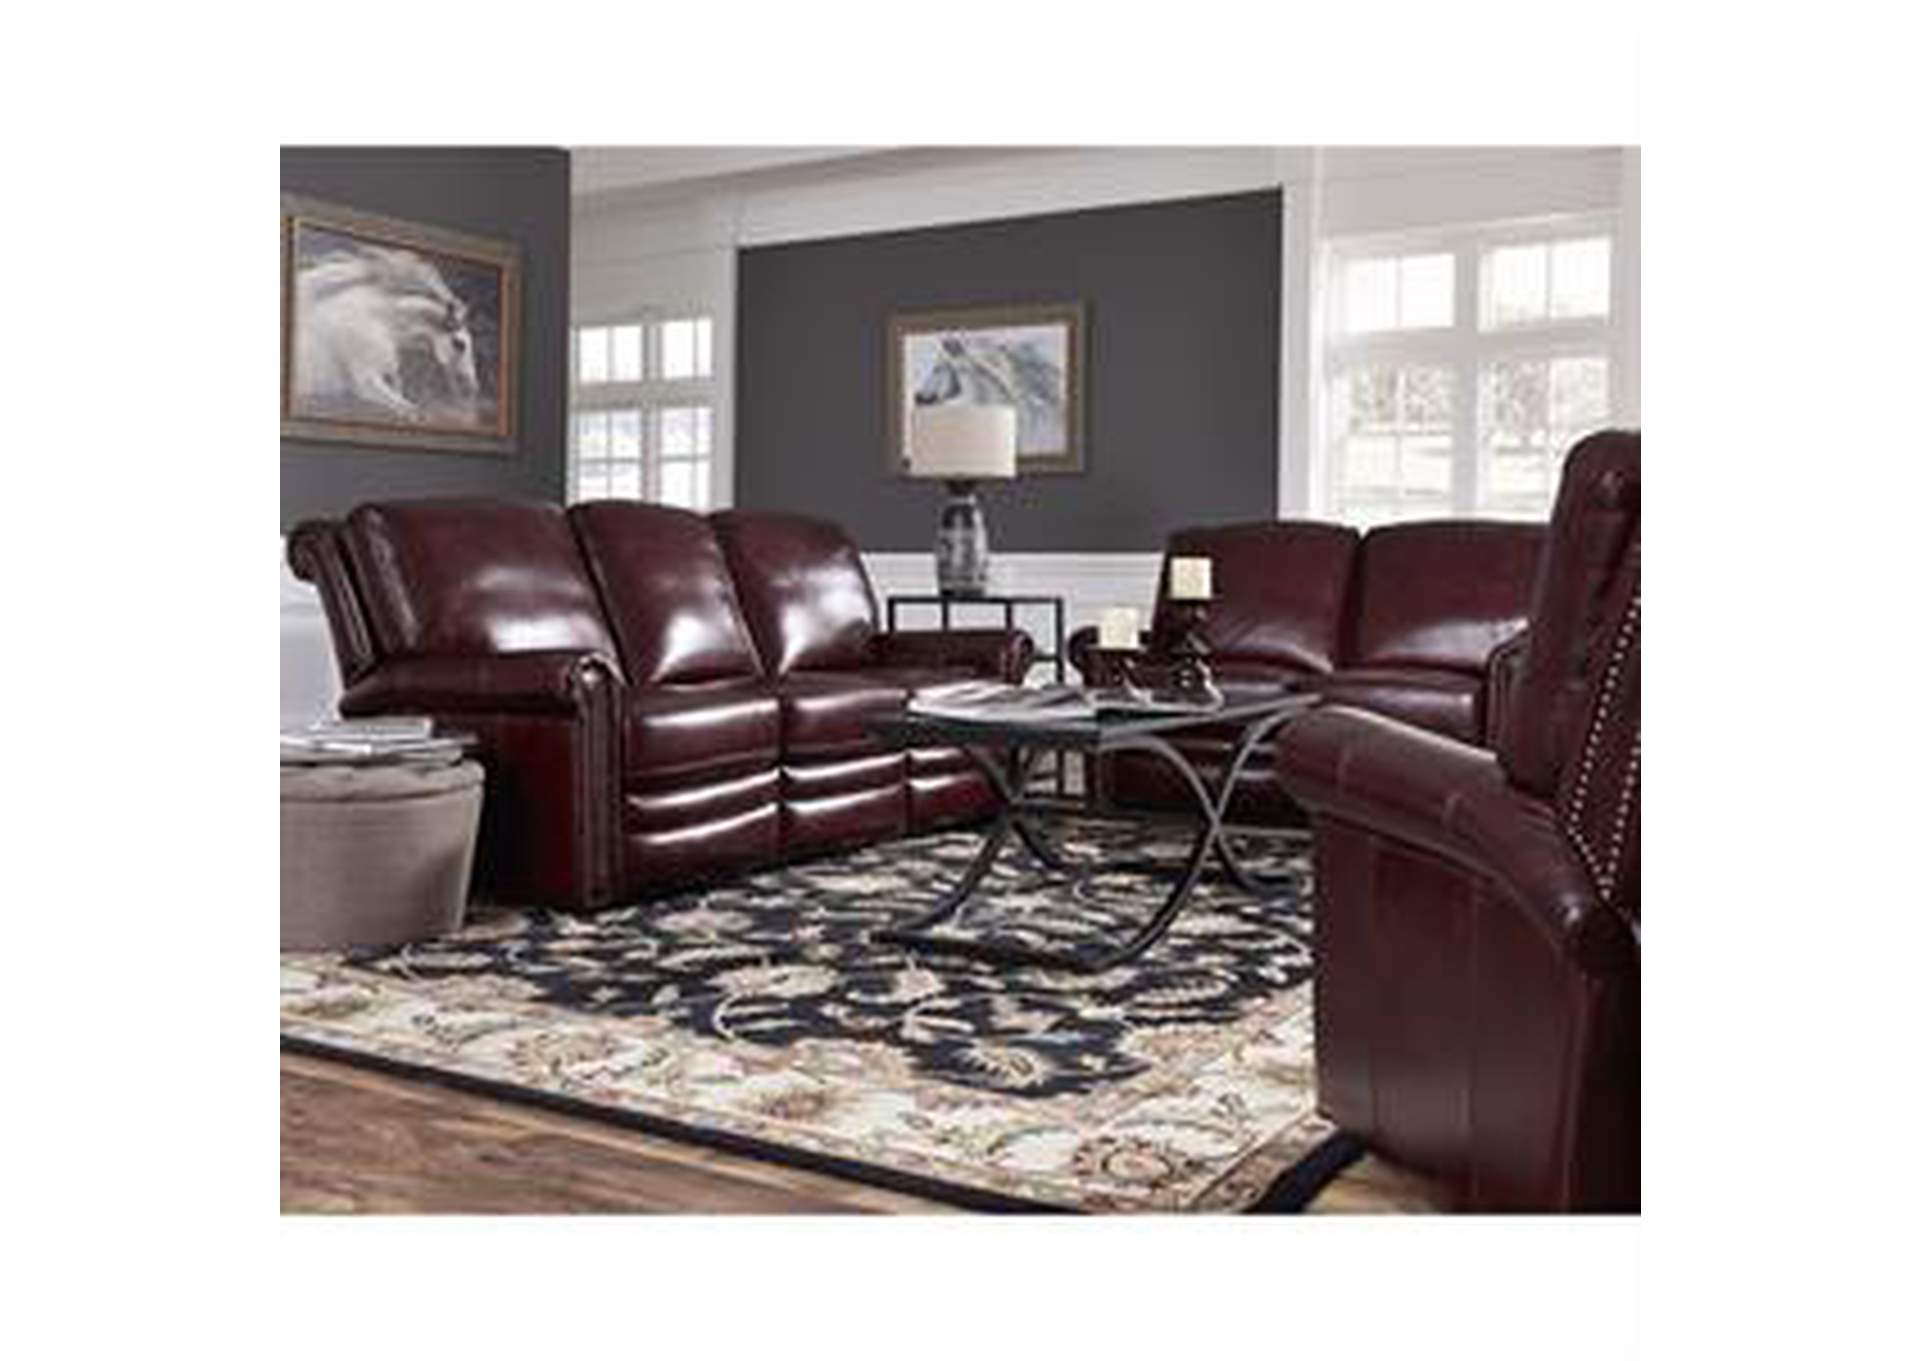 Grant Deep Merlot Red Leather Power Sofa Set W/ Sofa & Loveseat,Pulaski Furniture